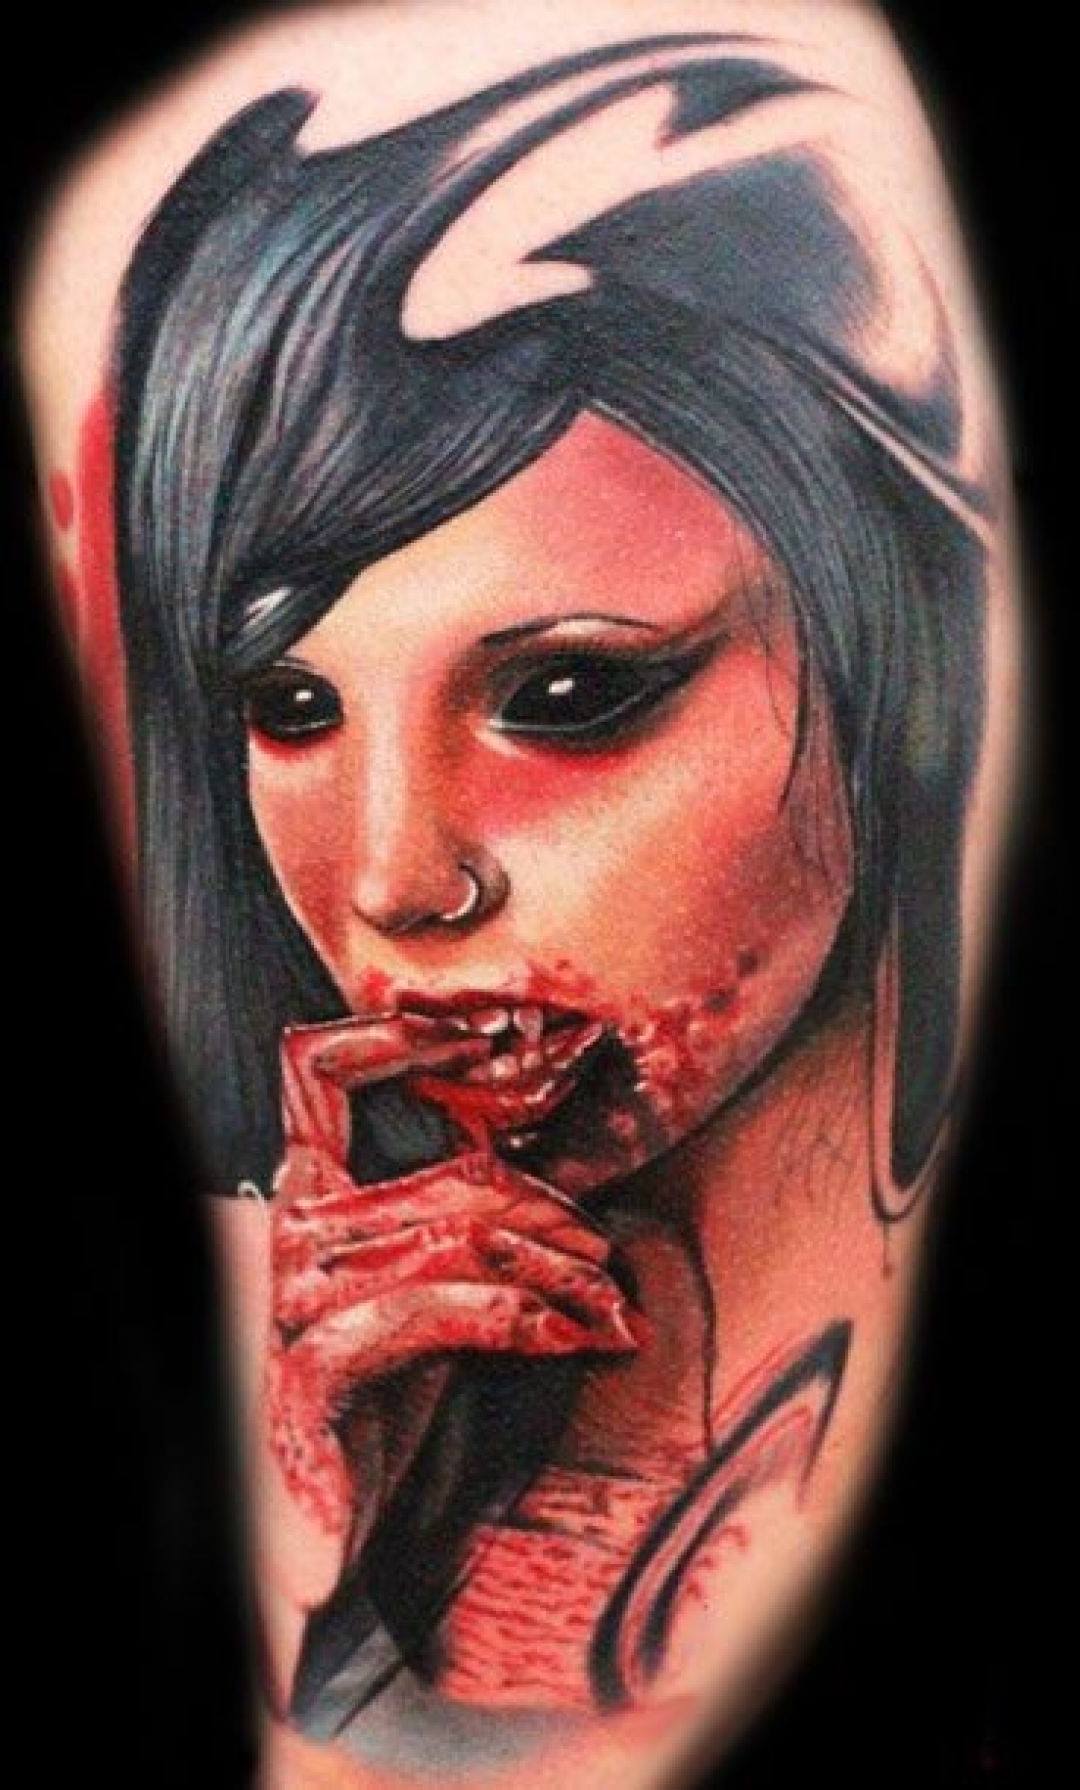 Vampira ao estilo filme de terror tatuada no braço